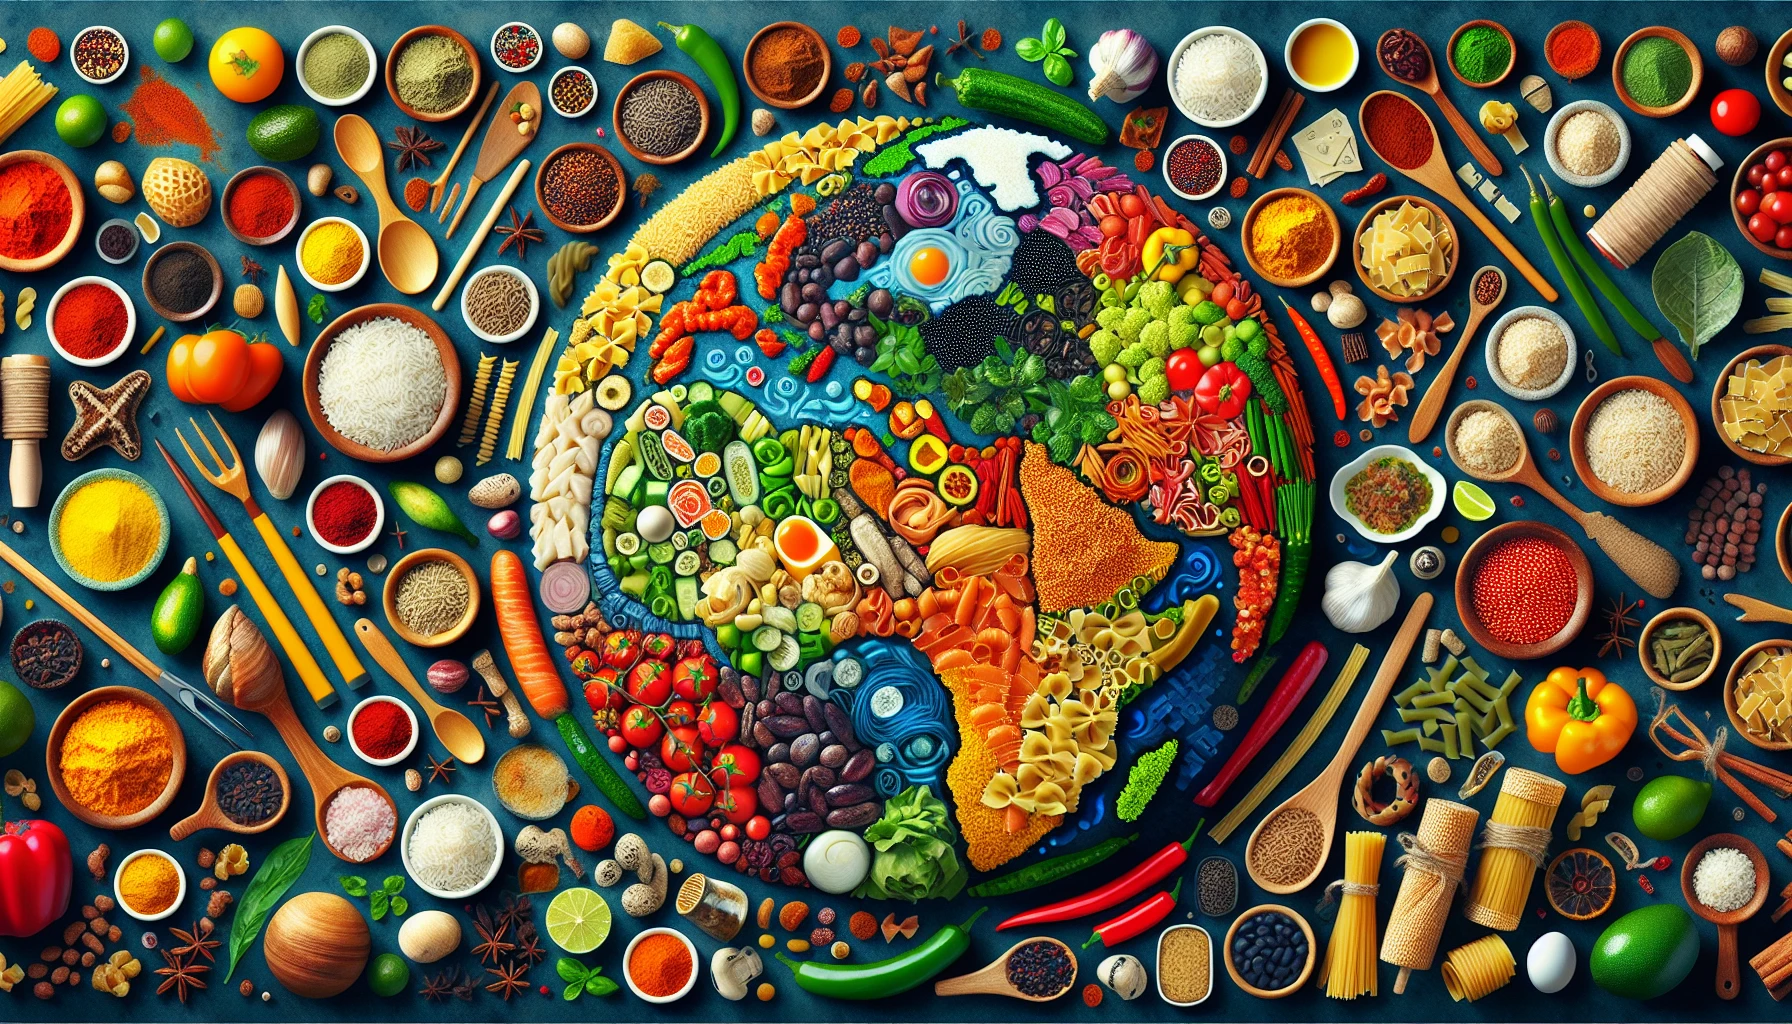 Kitchen Stories app for exploring global cuisines